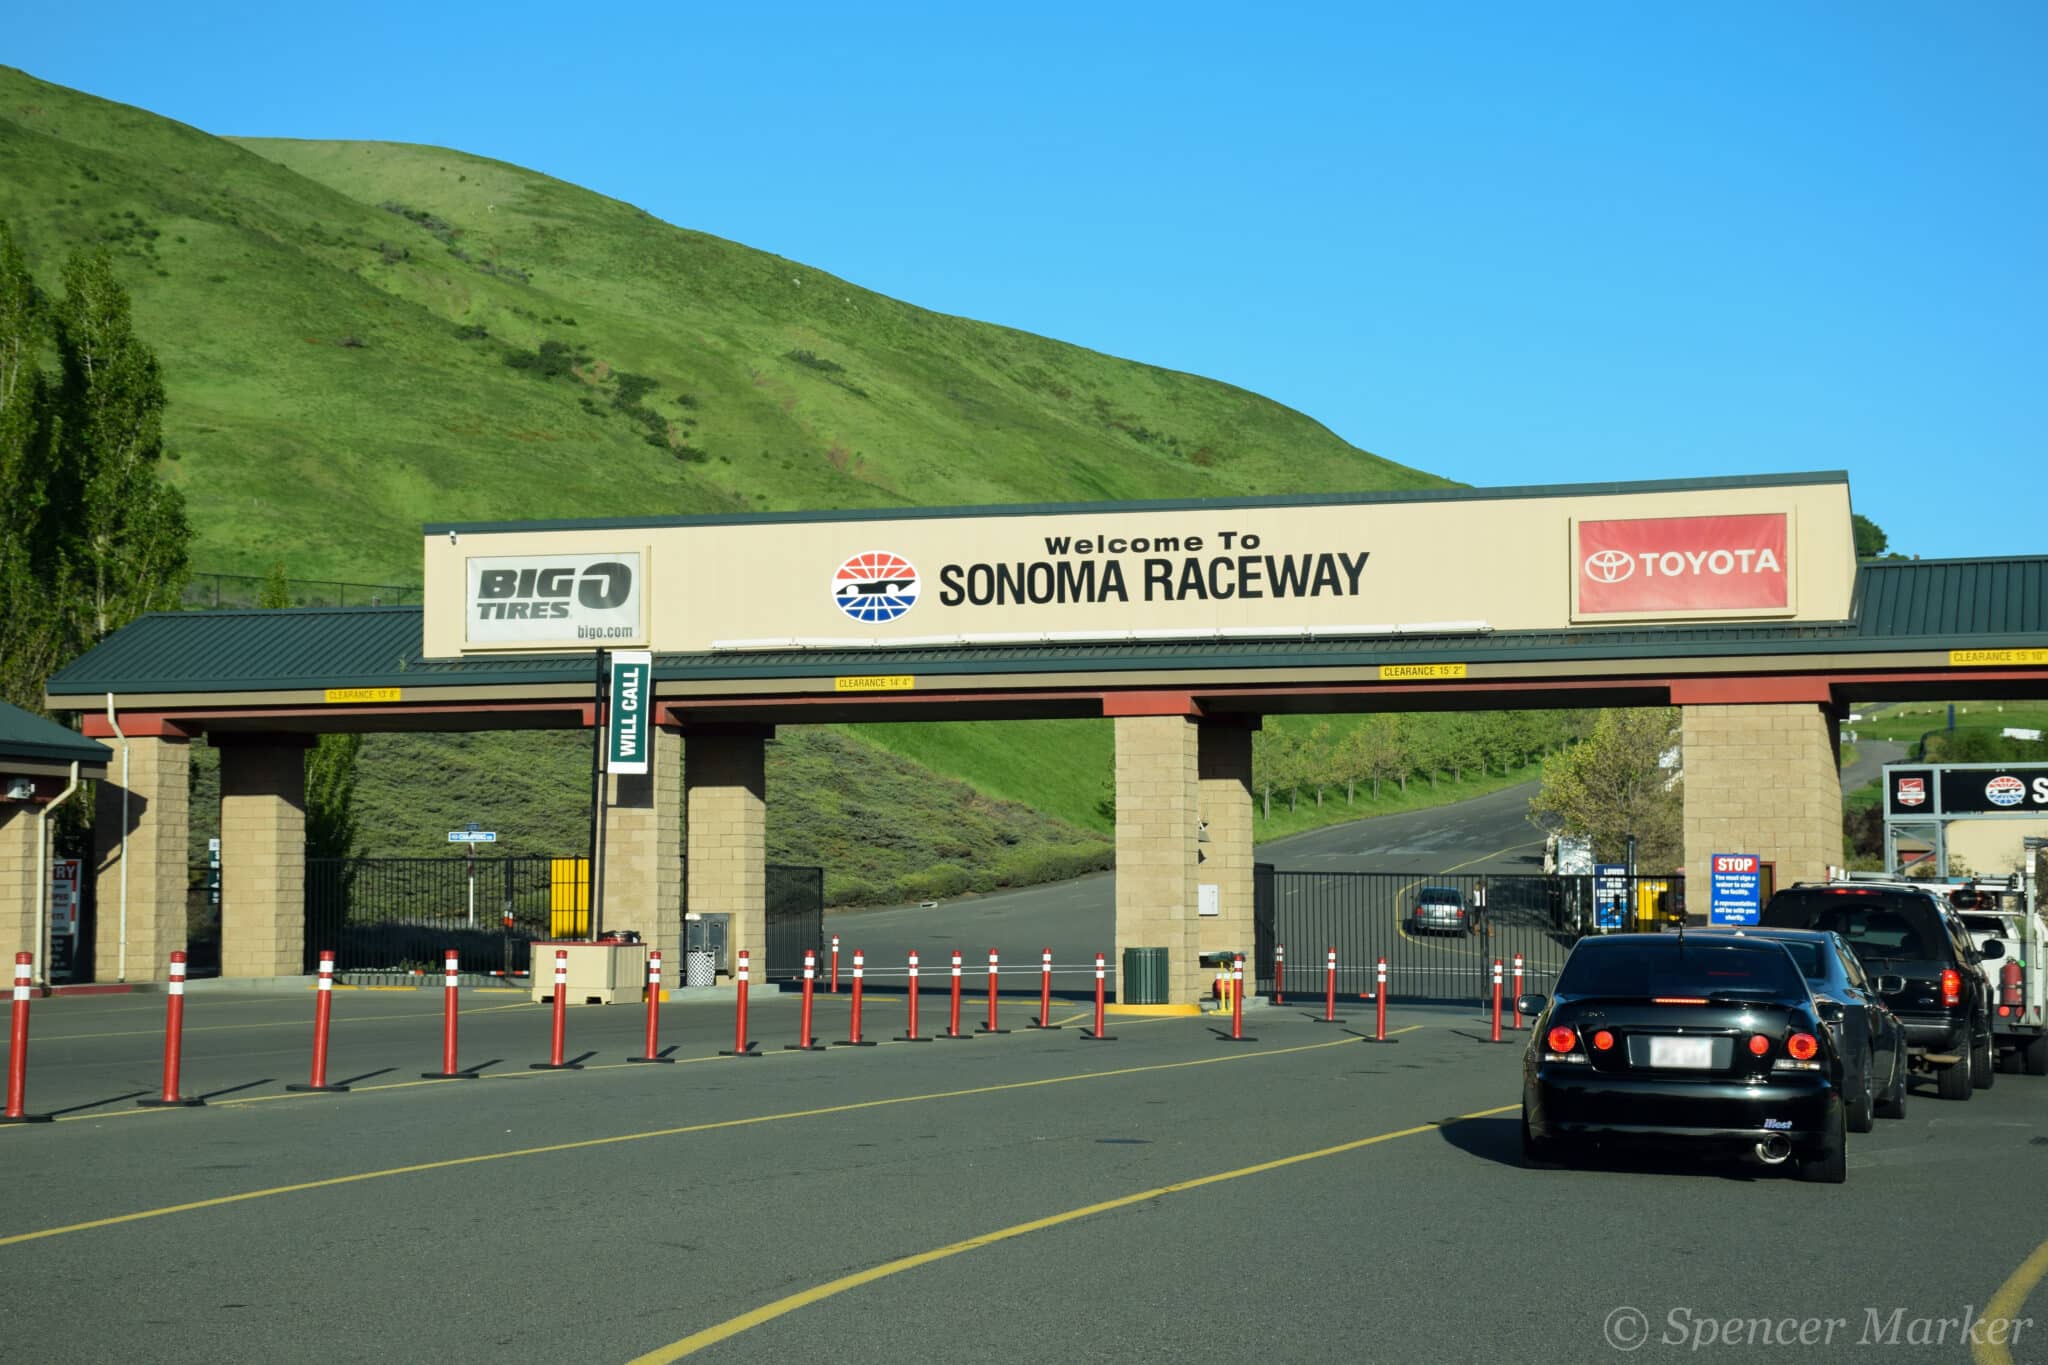 The entrance to Sonoma Raceway